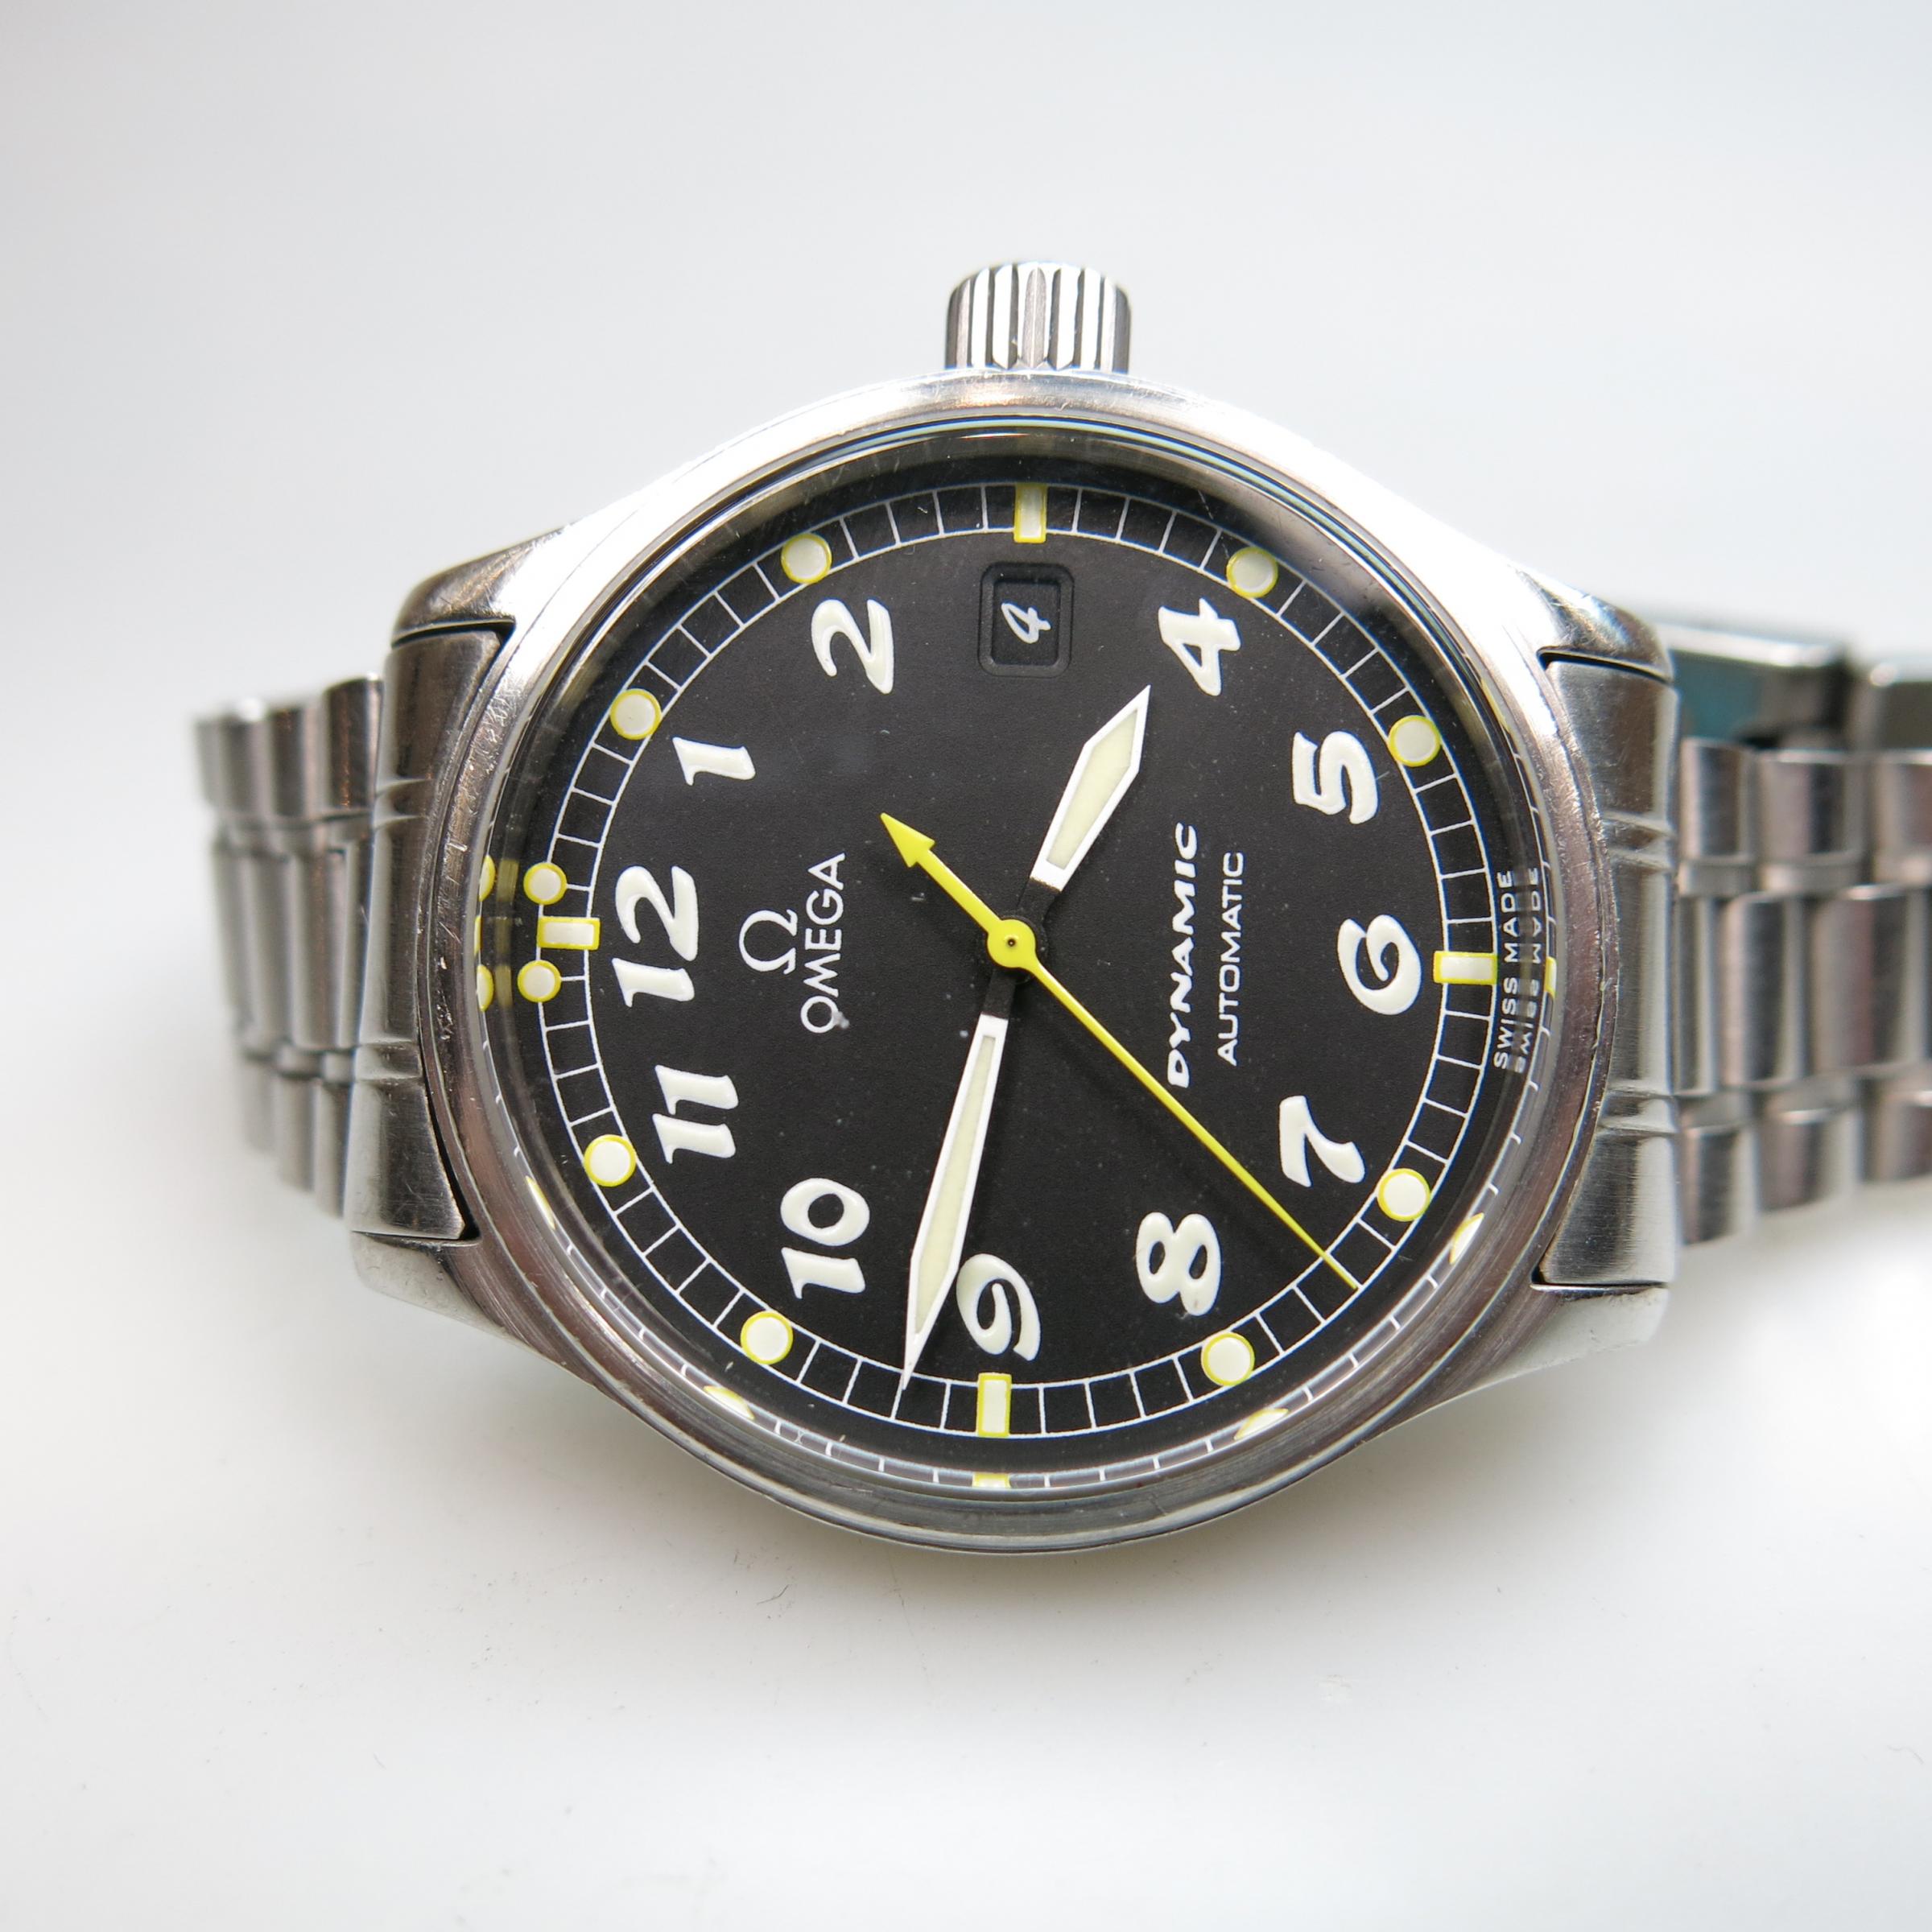 Omega 'Dynamic' Wristwatch With Date